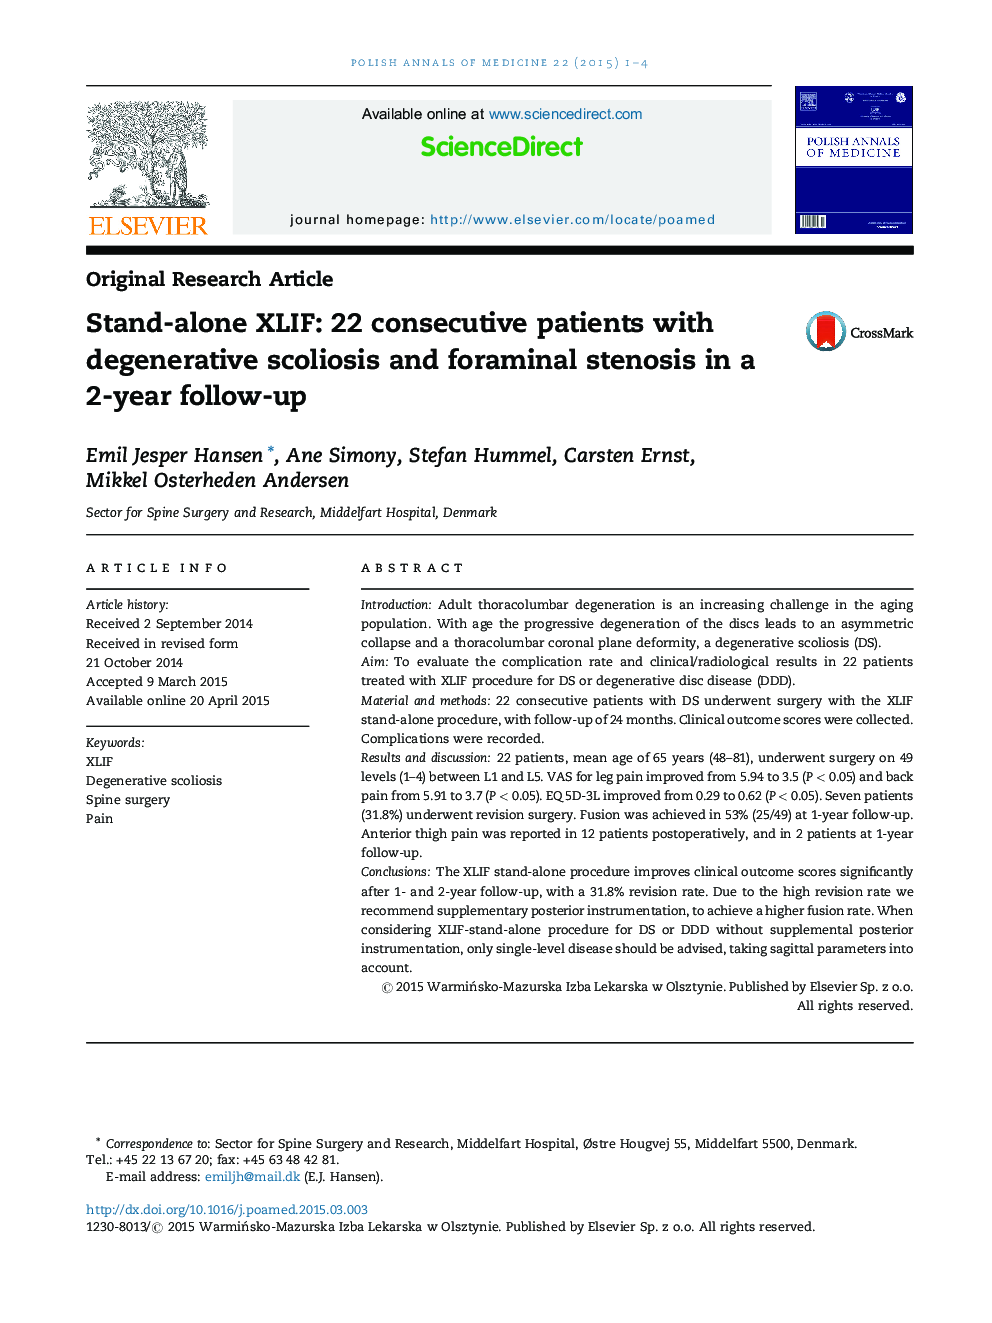 XLIF مستقل: 22 بیمار متوالی با اسکولیوز دژنراتیو و تنگی foraminal در یک پیگیری 2 ساله